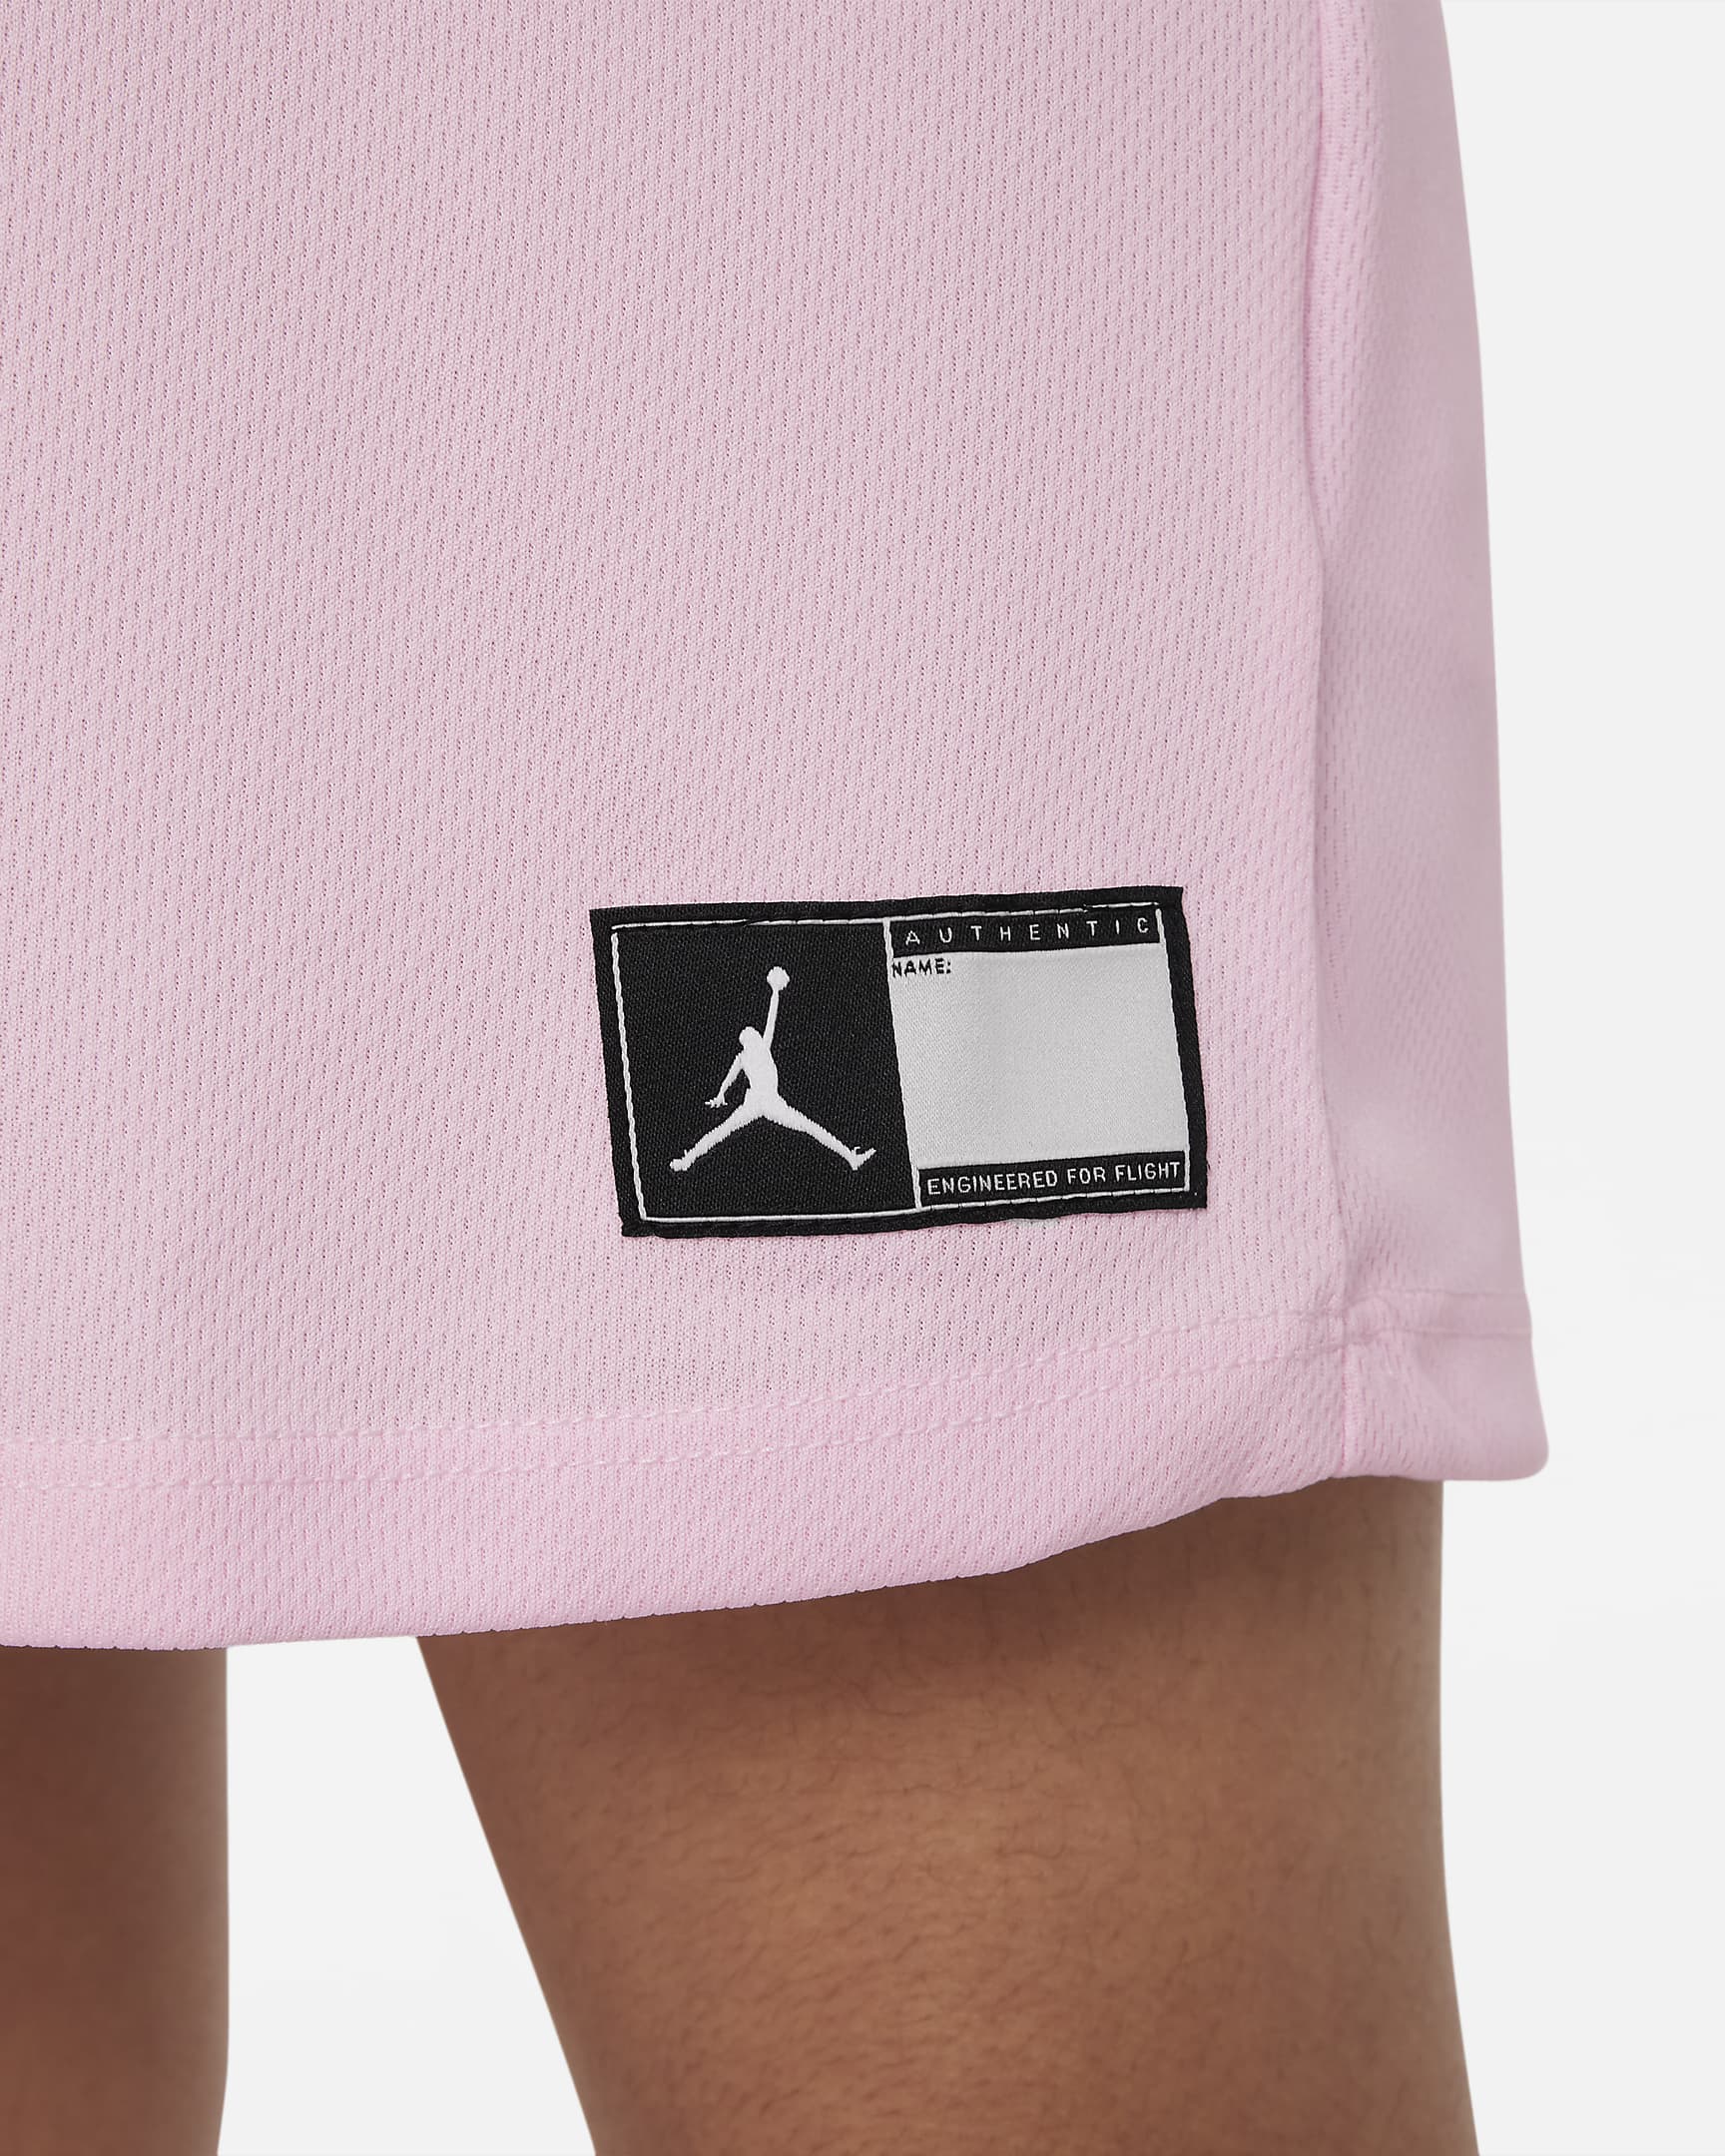 Jordan Little Kids' Dress. Nike.com